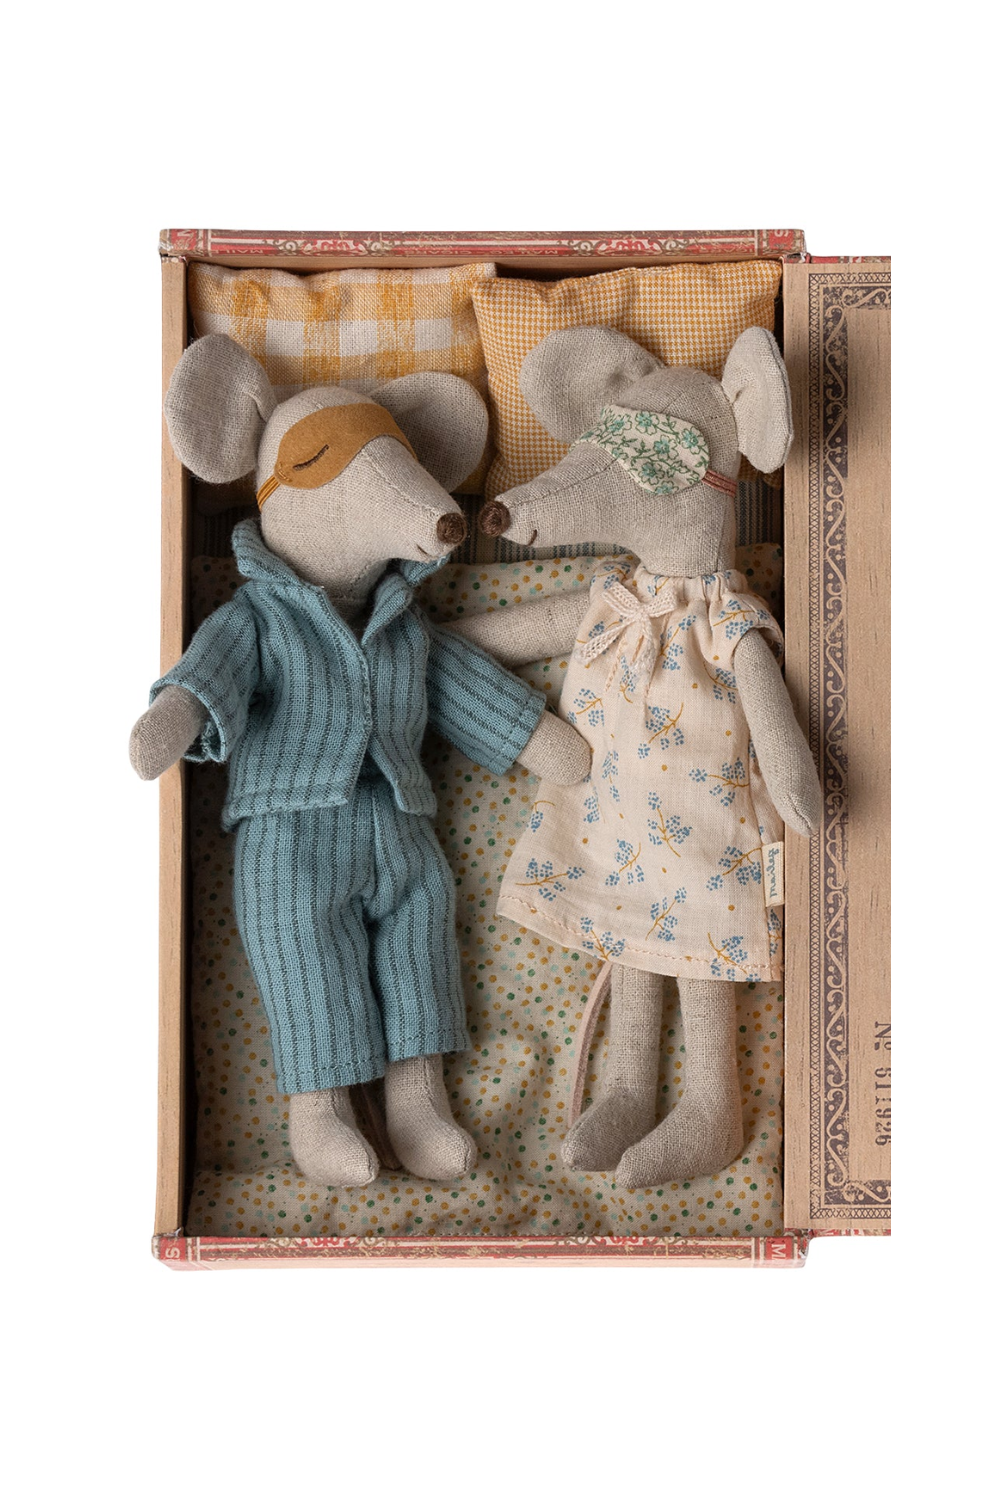 Maileg Mum & Dad Mice in Cigar Box: Charming Dollhouse Set